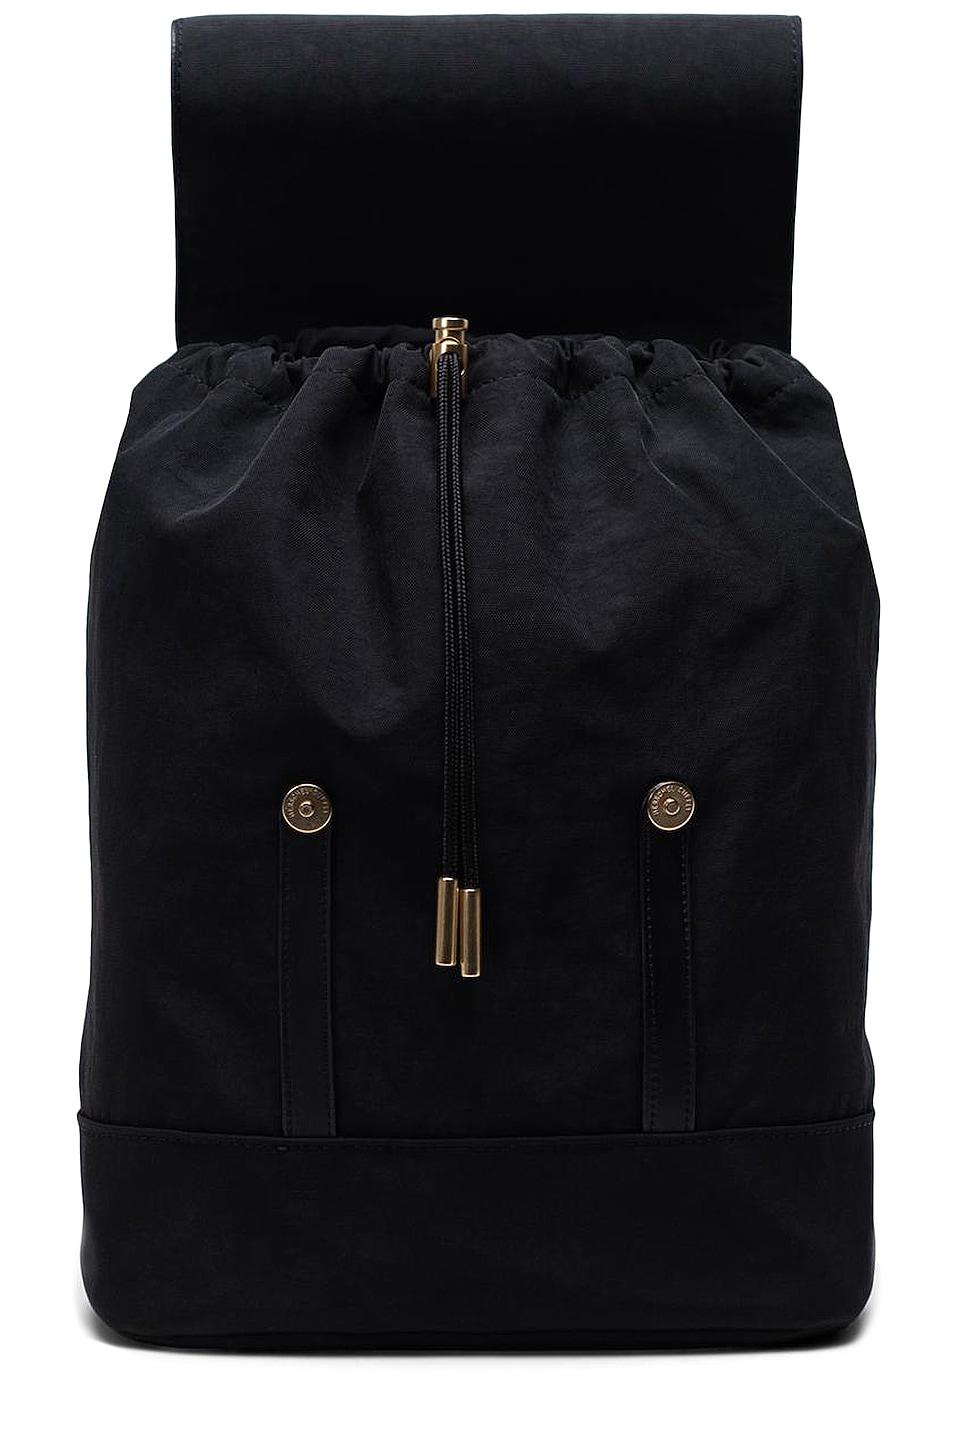 Orion Backpack Mini Black